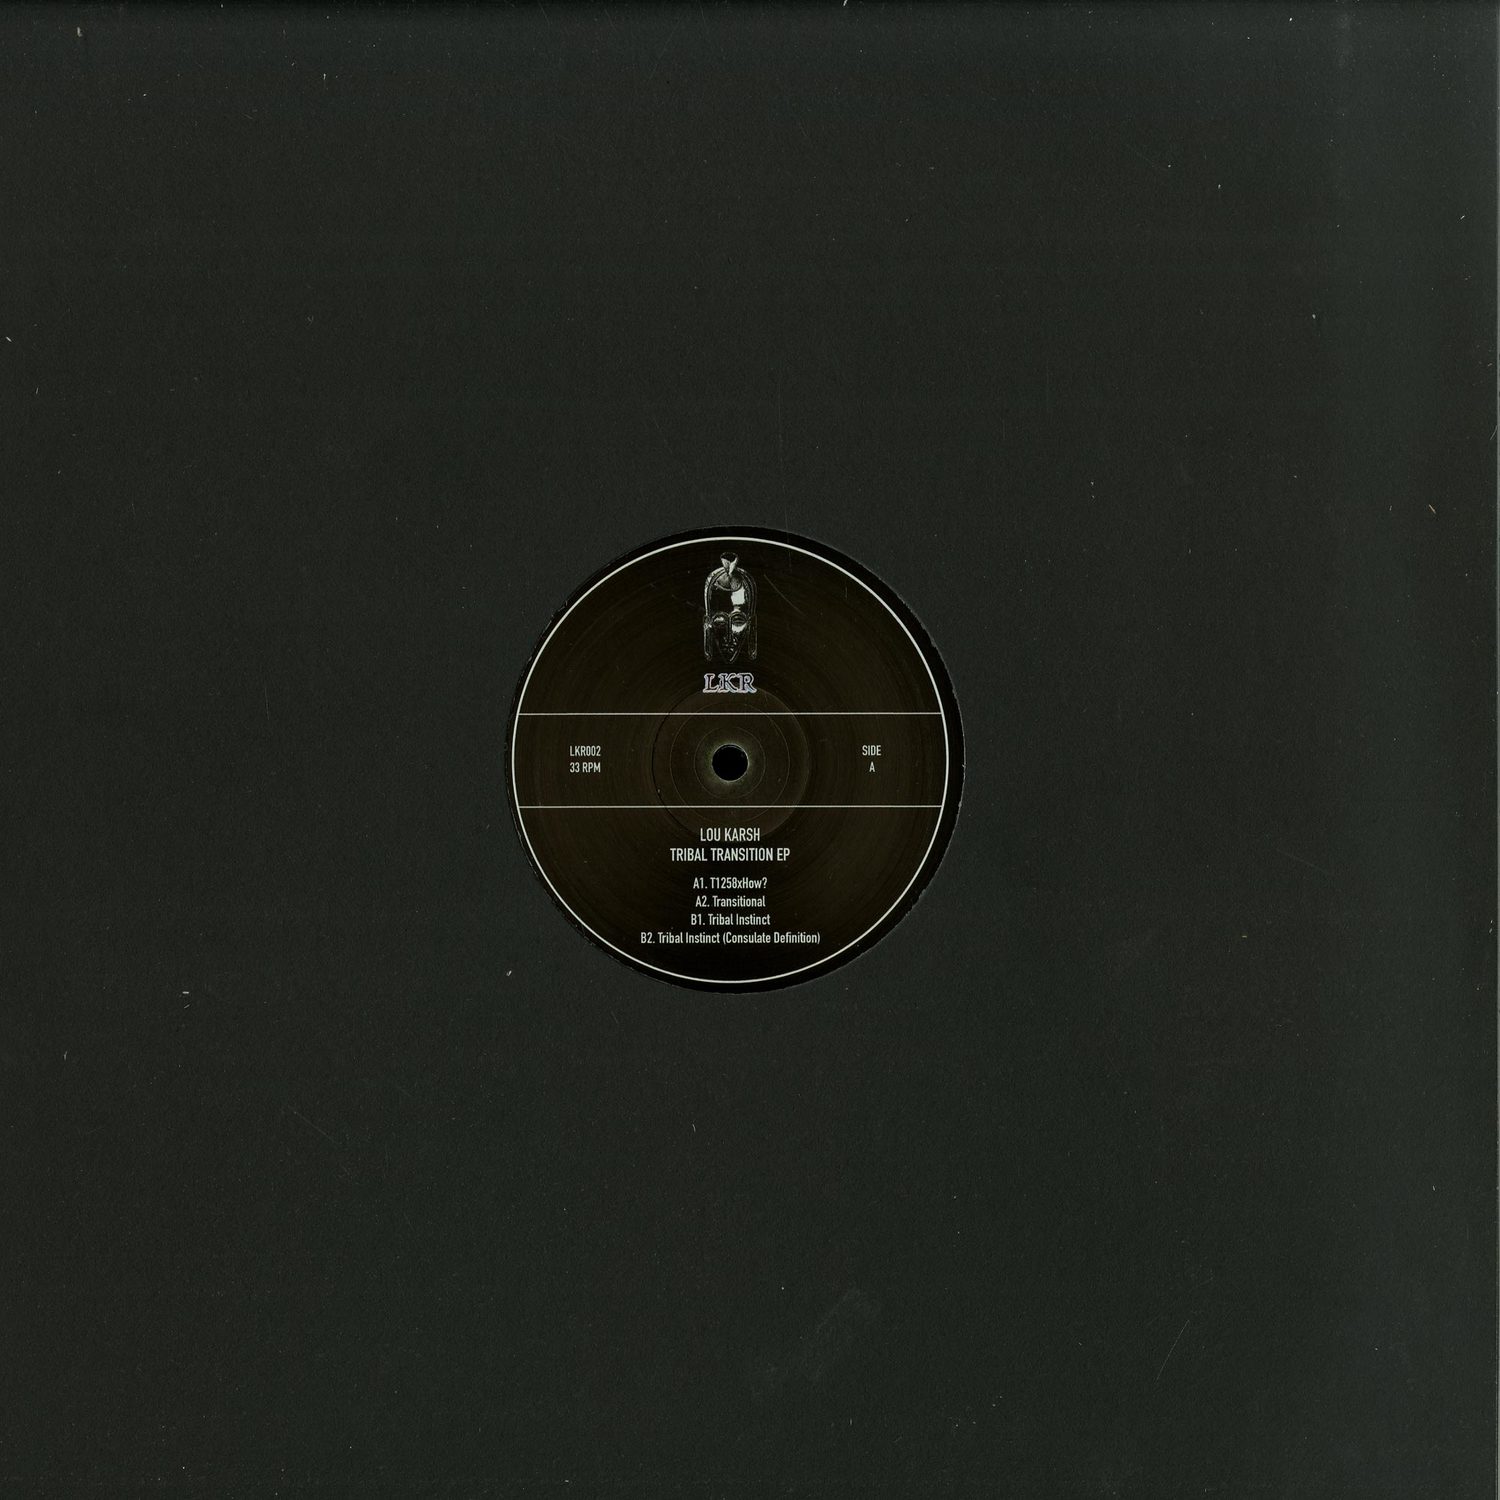 Lou Karsh - TRIBAL TRANSITION EP 